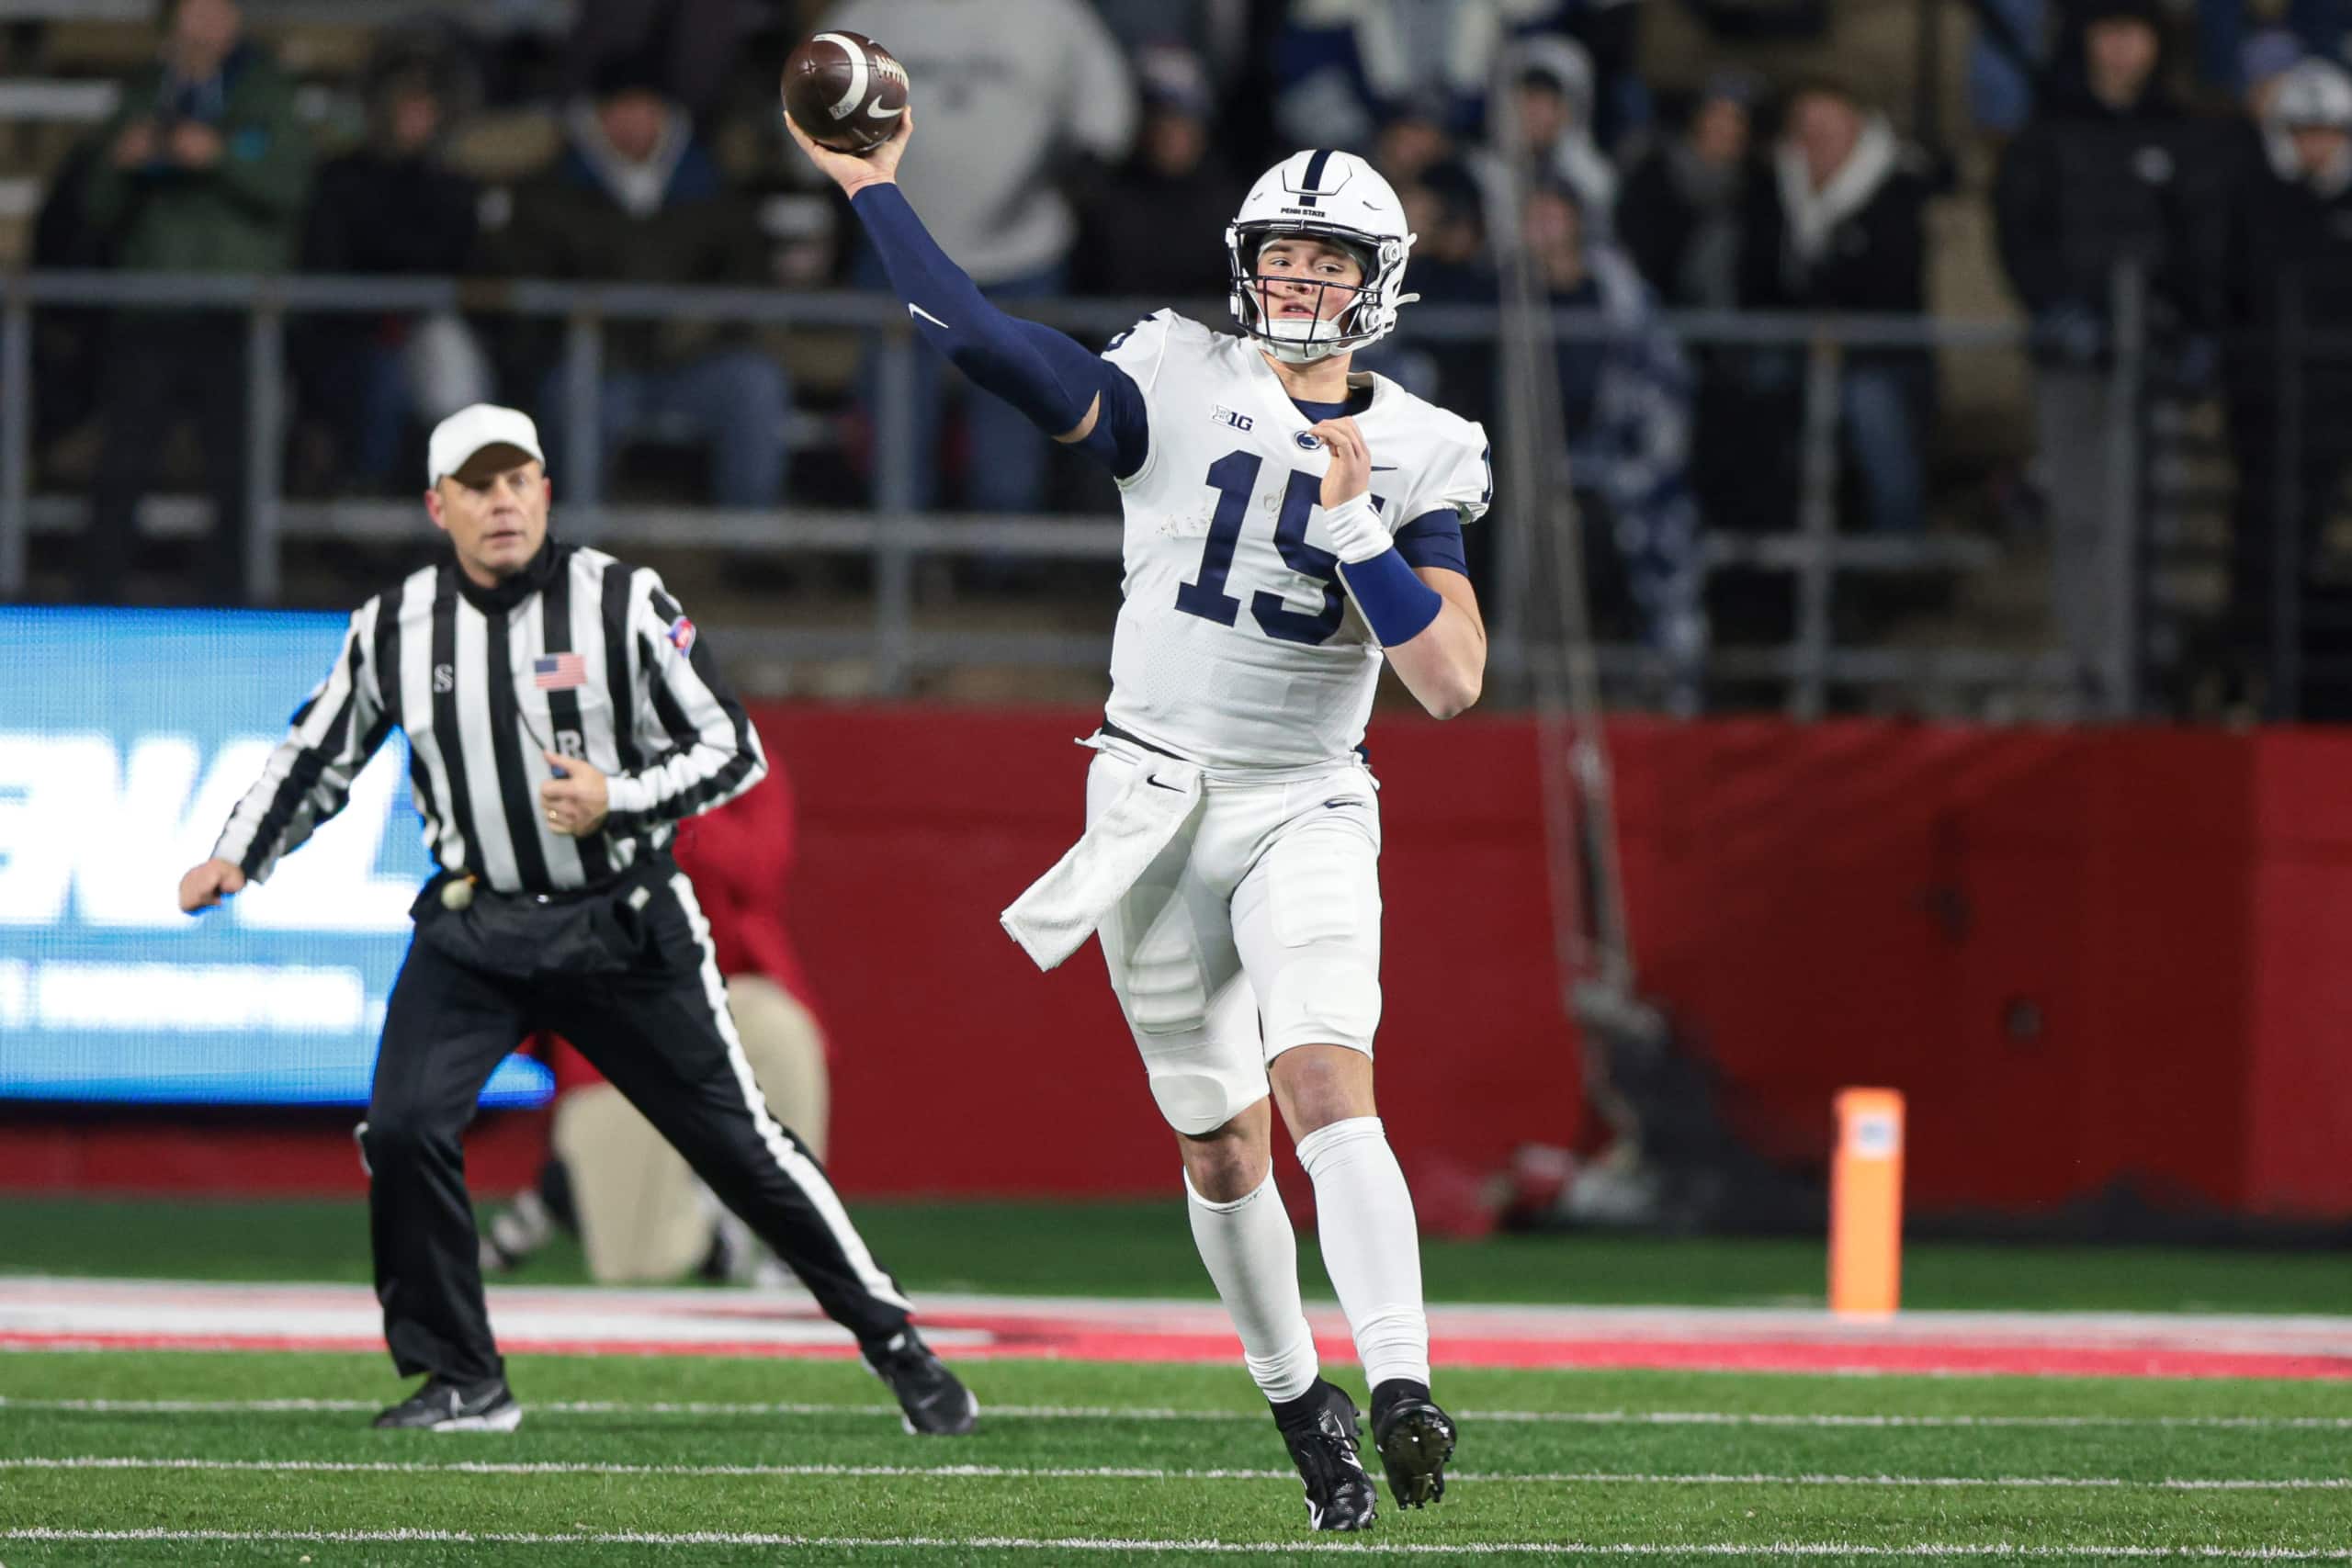 Penn State Freshman quarterback Drew Allar completes pass during college football game